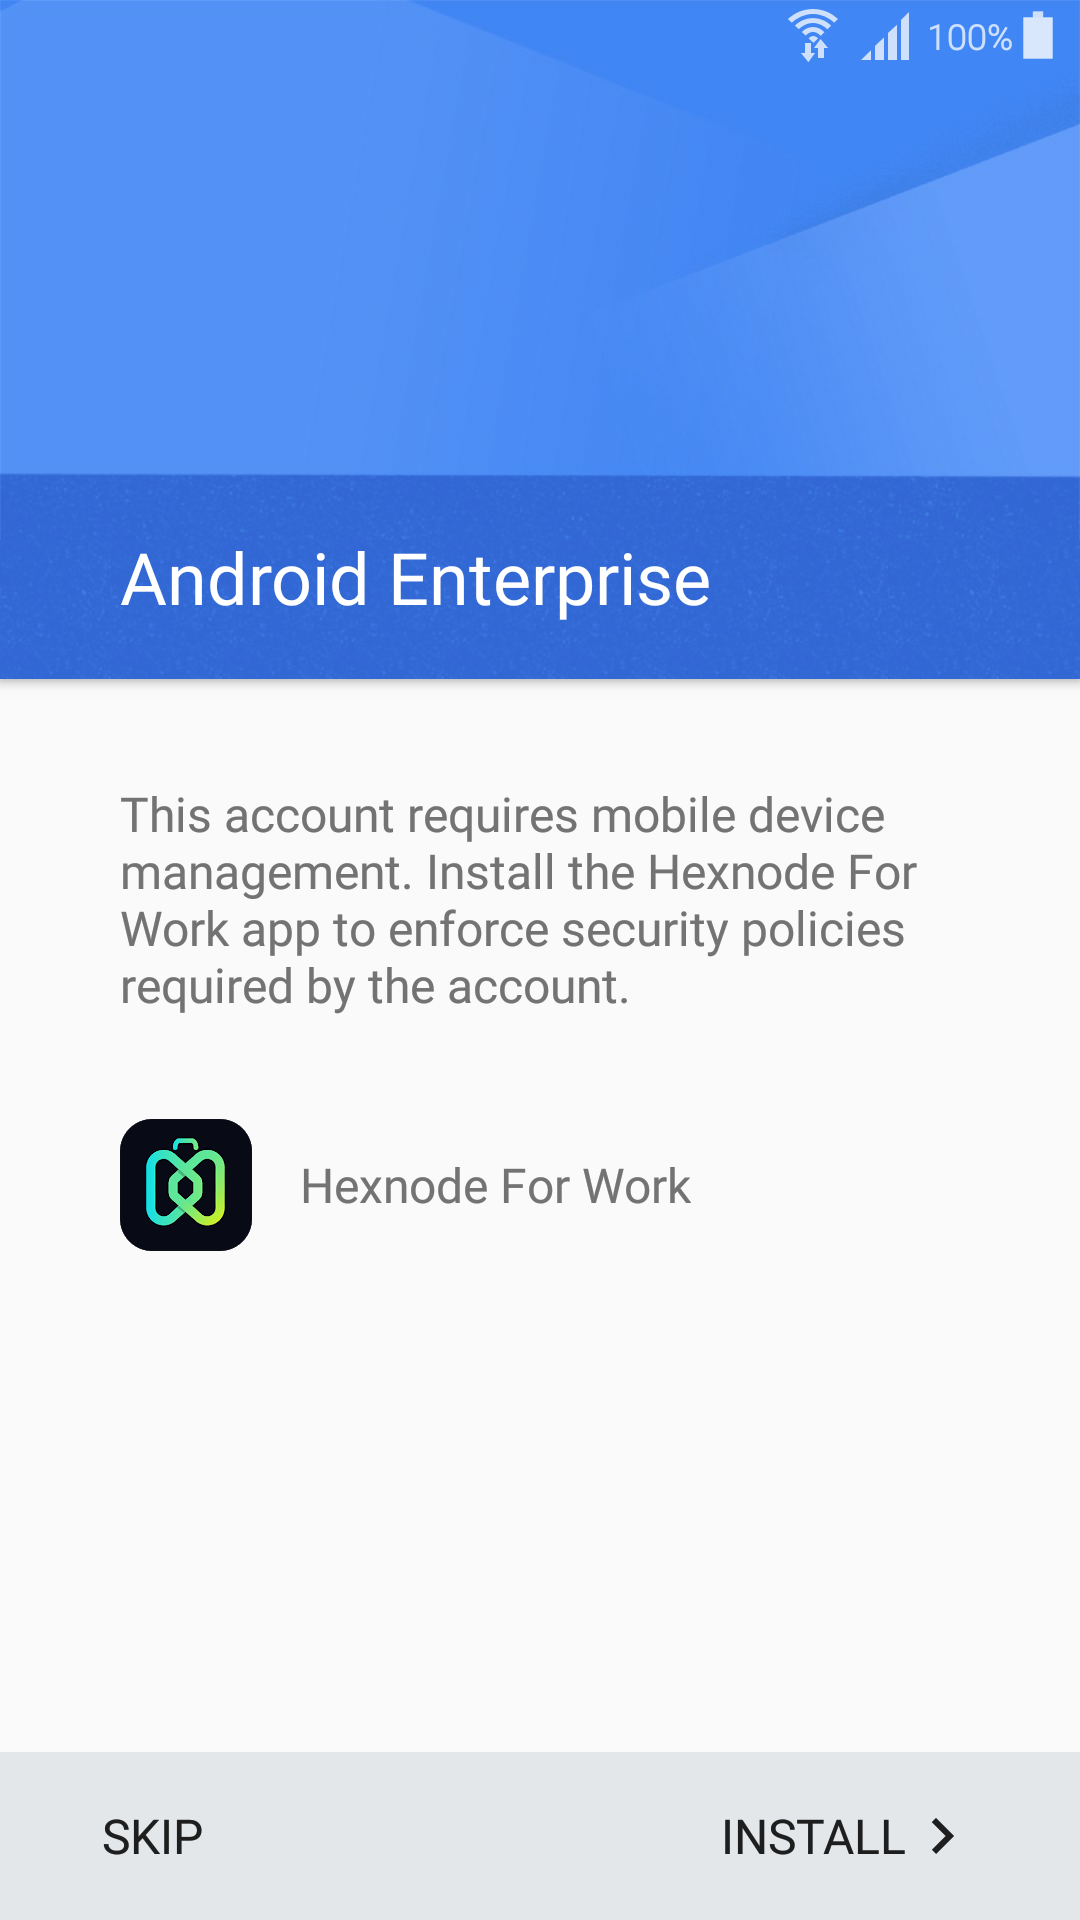 Install Hexnode for work app for Android Enterprise enrollment